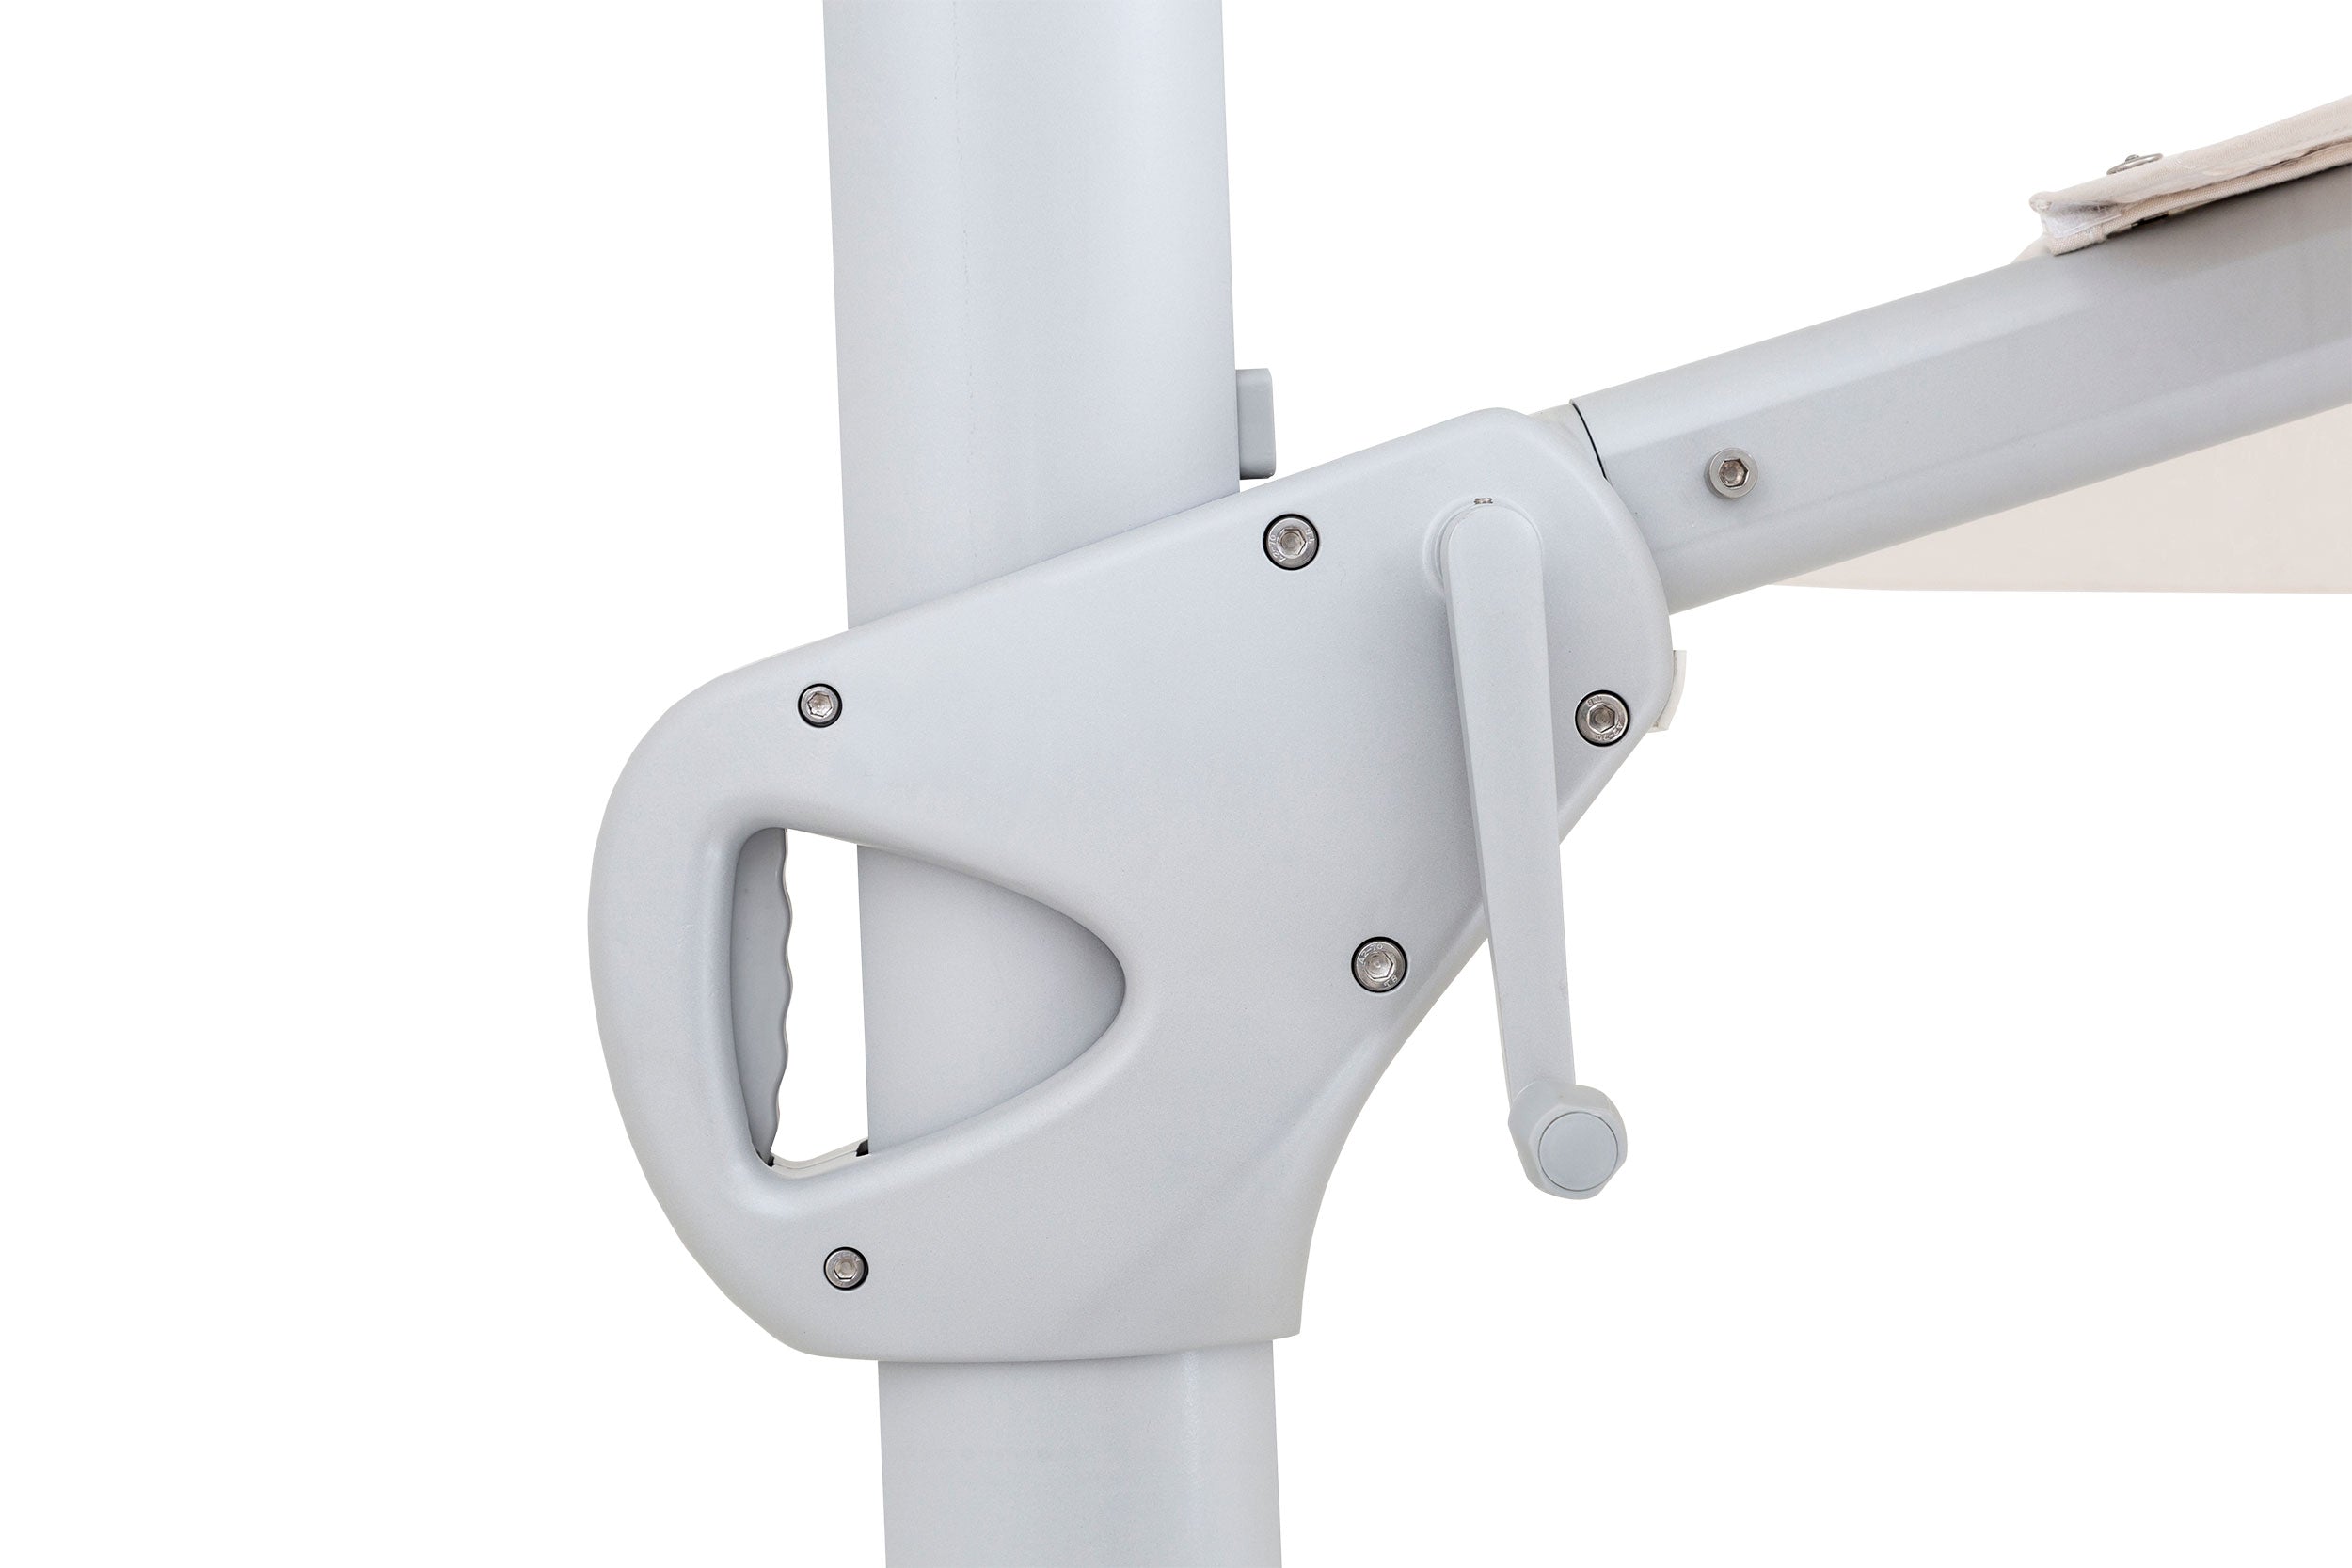 Woodline - 9.8’ X 13.1’ Pavone Rectangular Cantilever Umbrella with Grip Handle - PA34REA